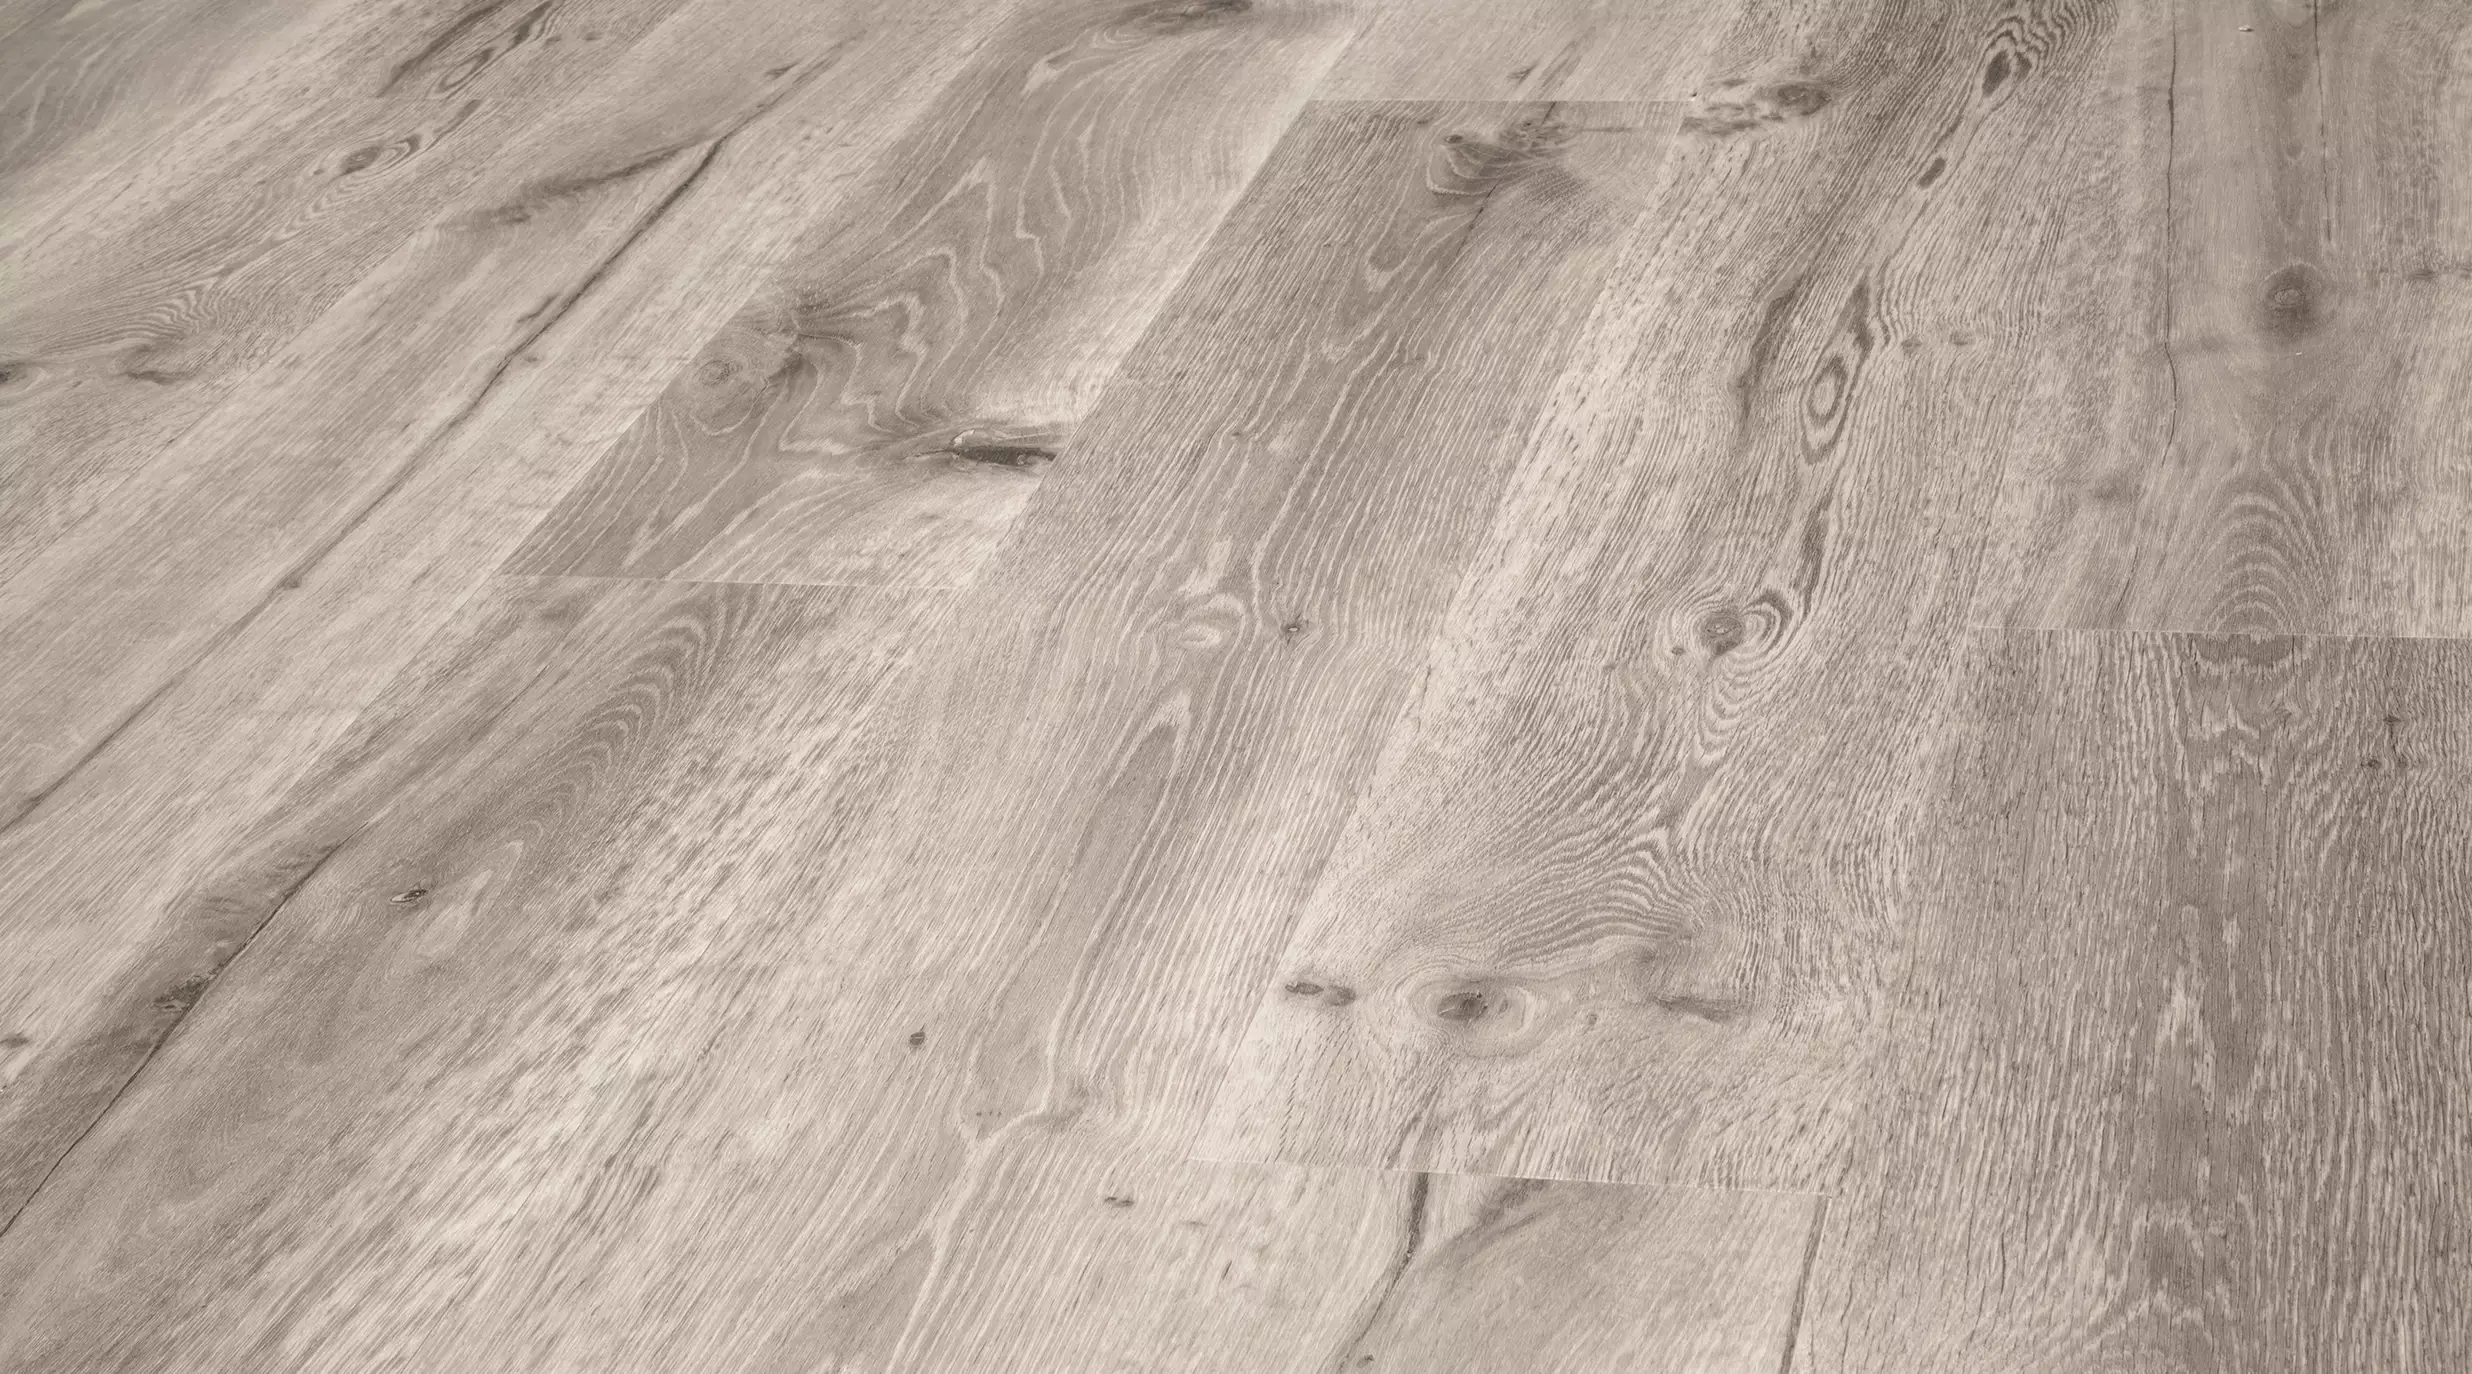 Palouse lvp flooring